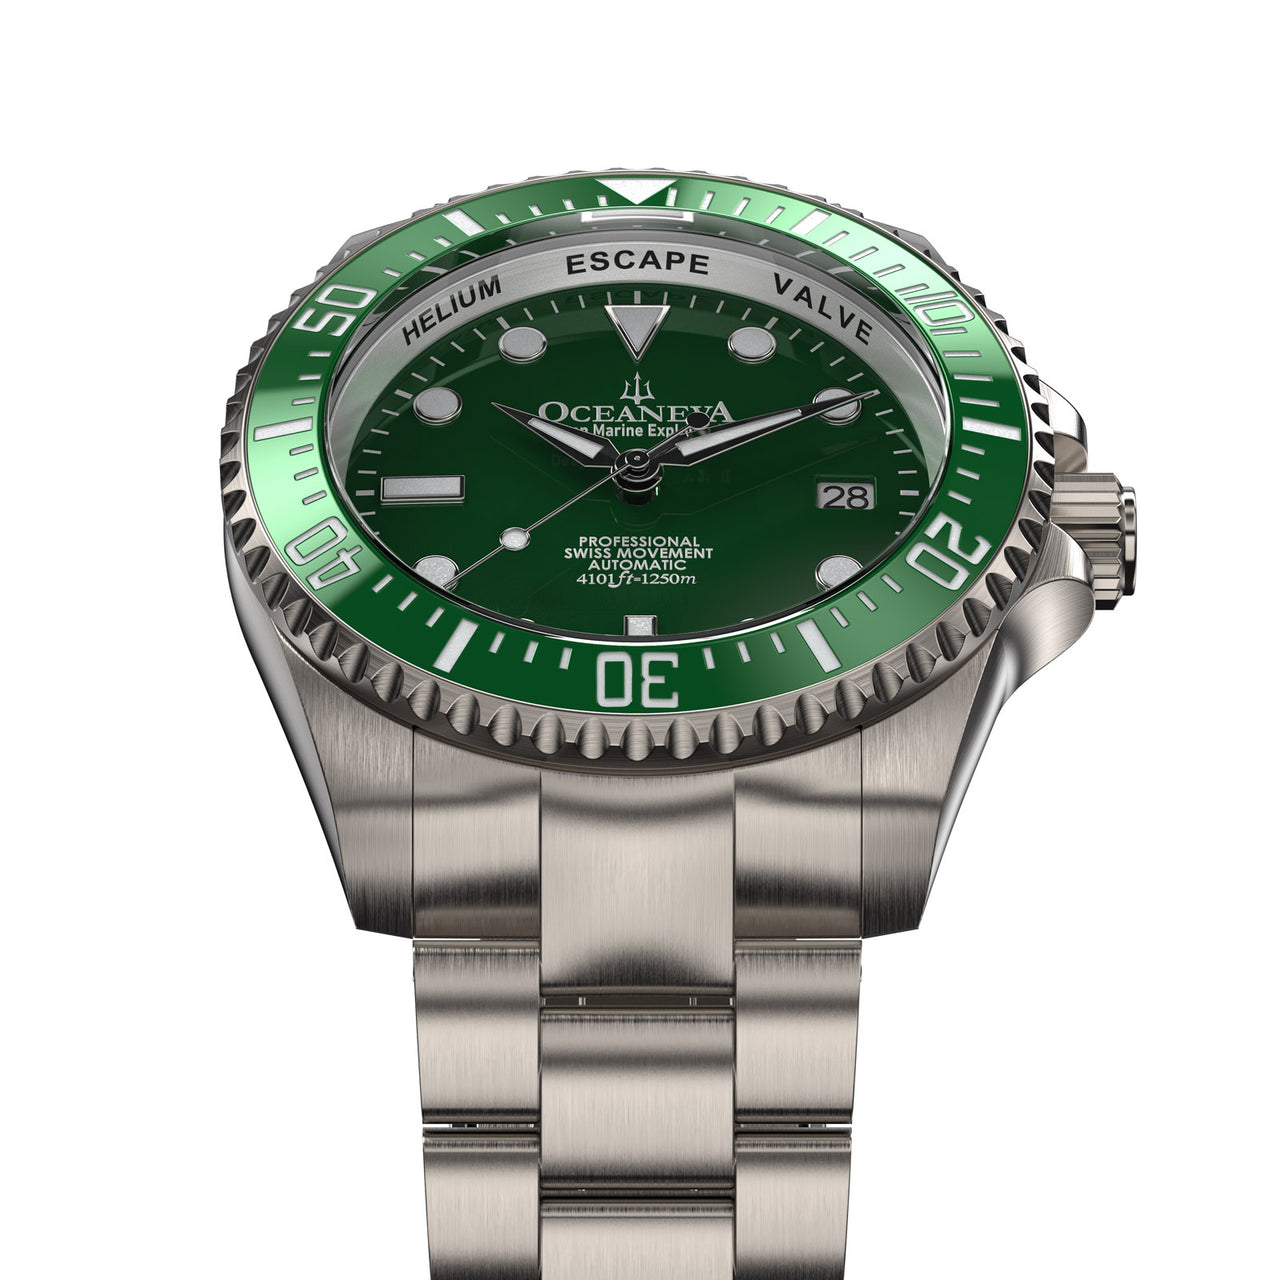 Oceaneva™ Men's Deep Marine Explorer II 1250M Titanium Watch Green and Green